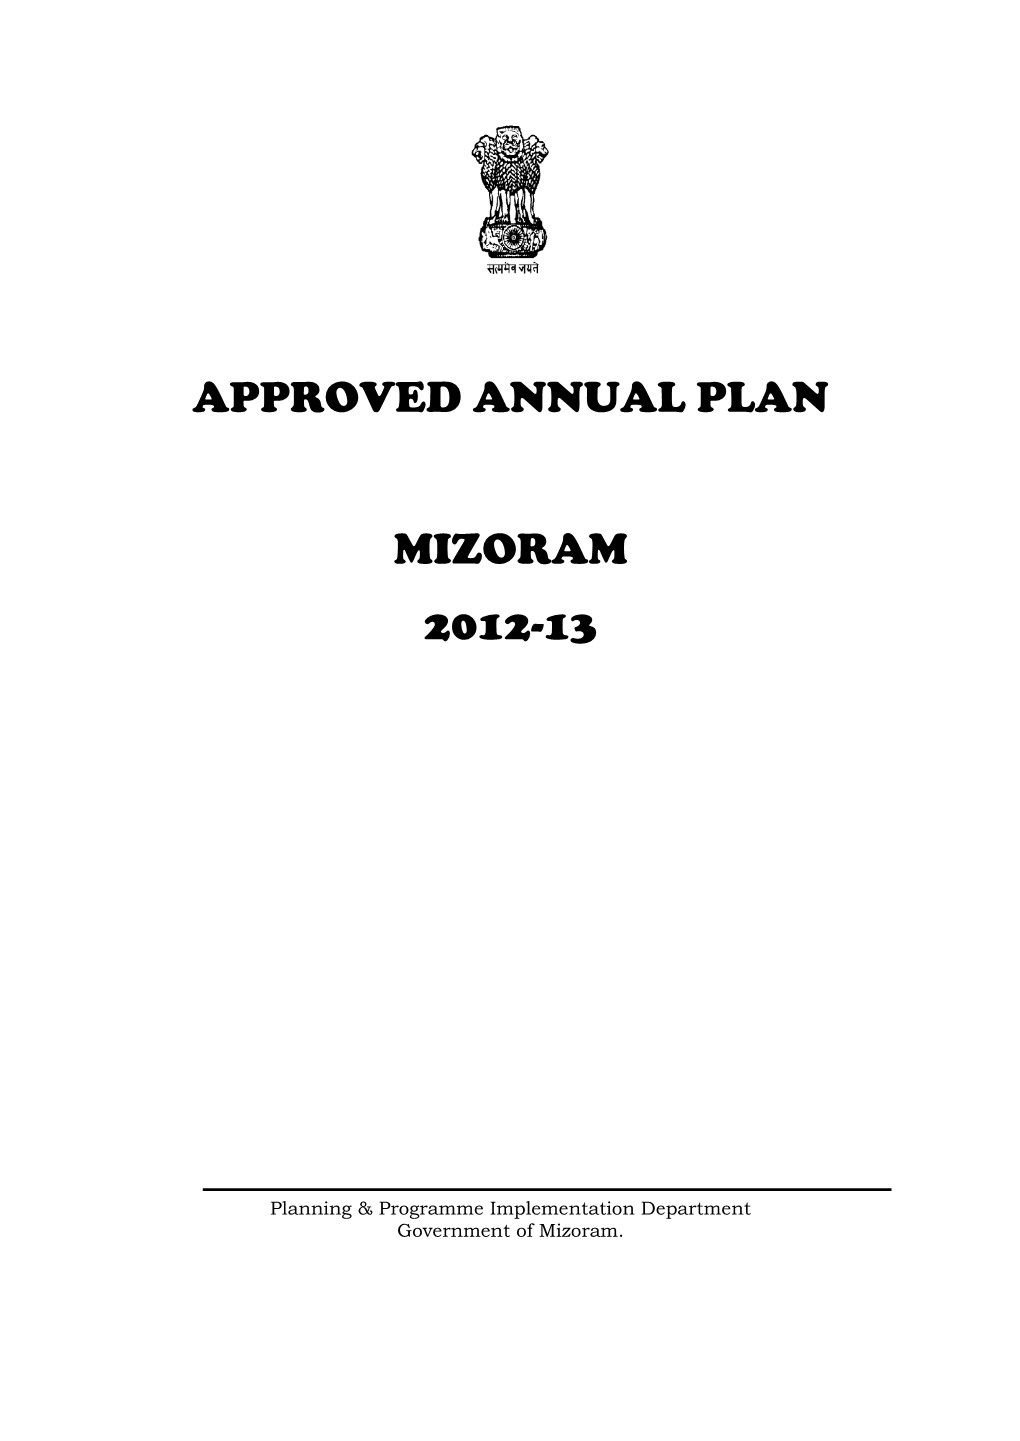 Approved Annual Plan Mizoram 2012-13